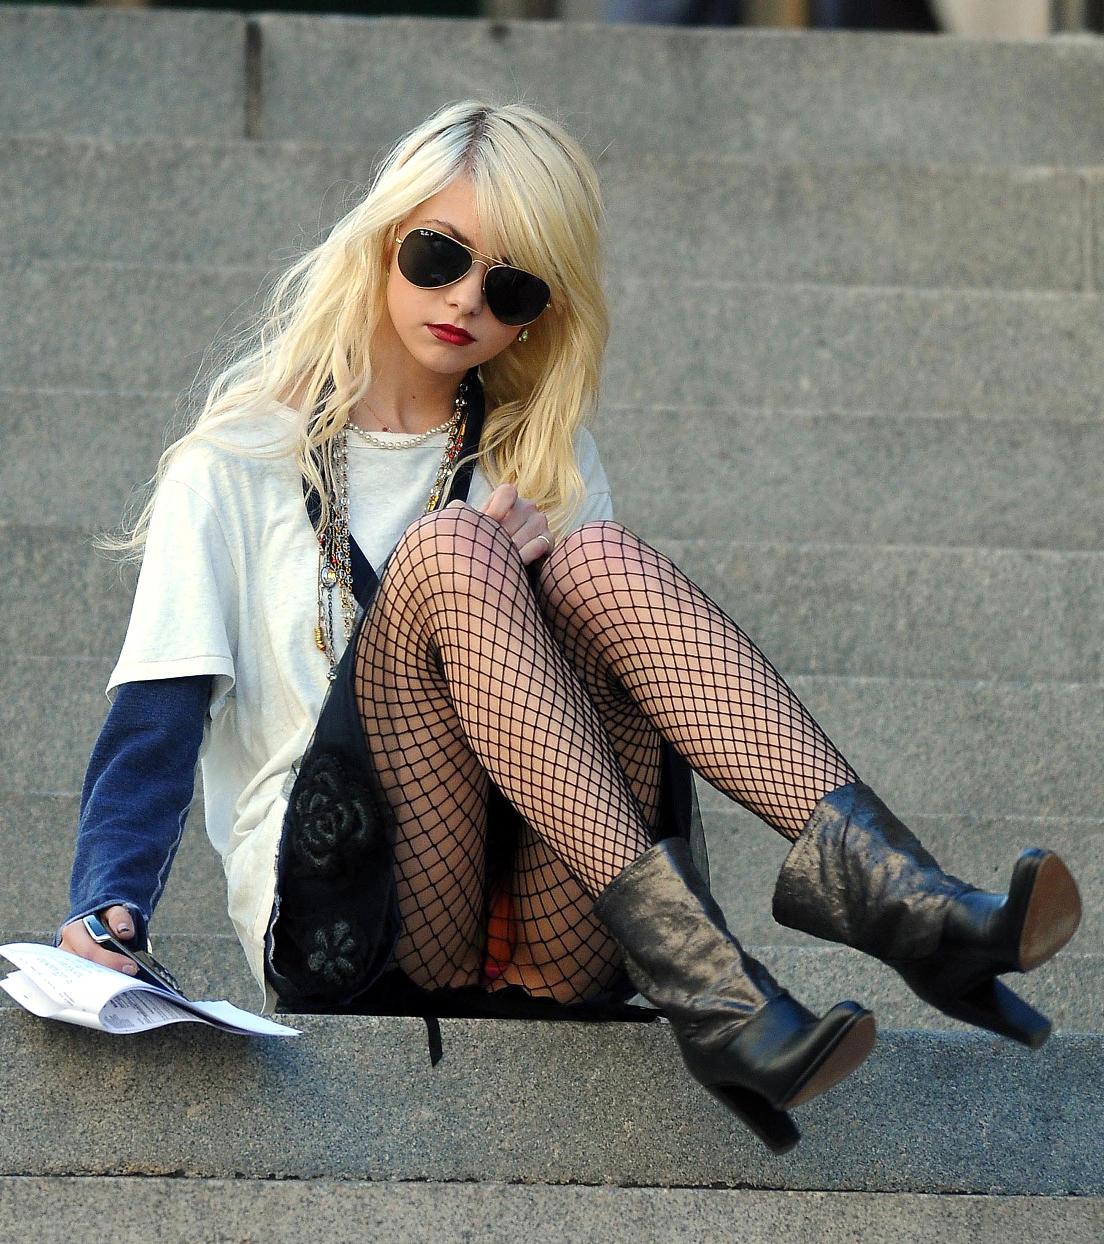 Blonde Teen Girl Upskirt wearing Black Fishnet Pantyhose and Black Skirt